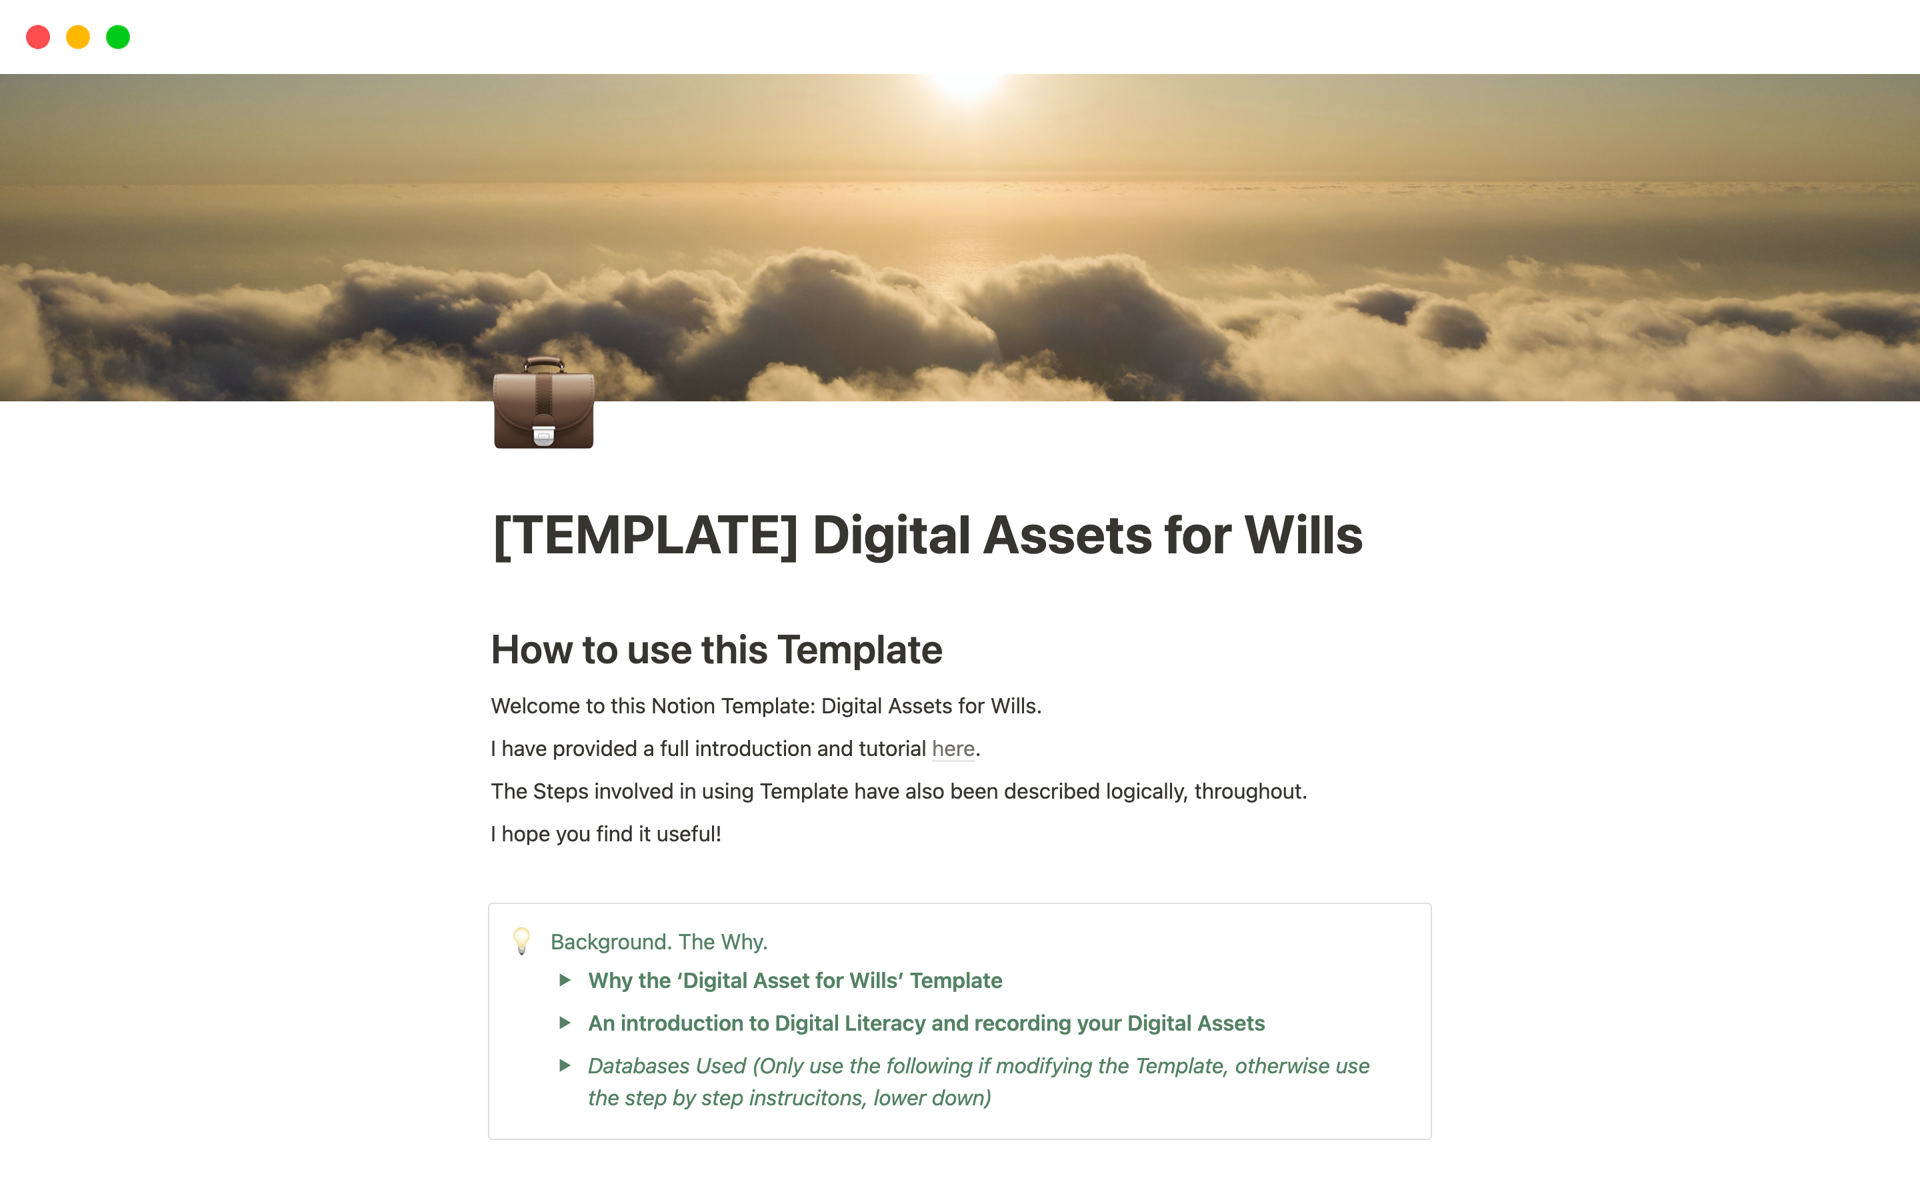 Aperçu du modèle de Digital Assets for Wills